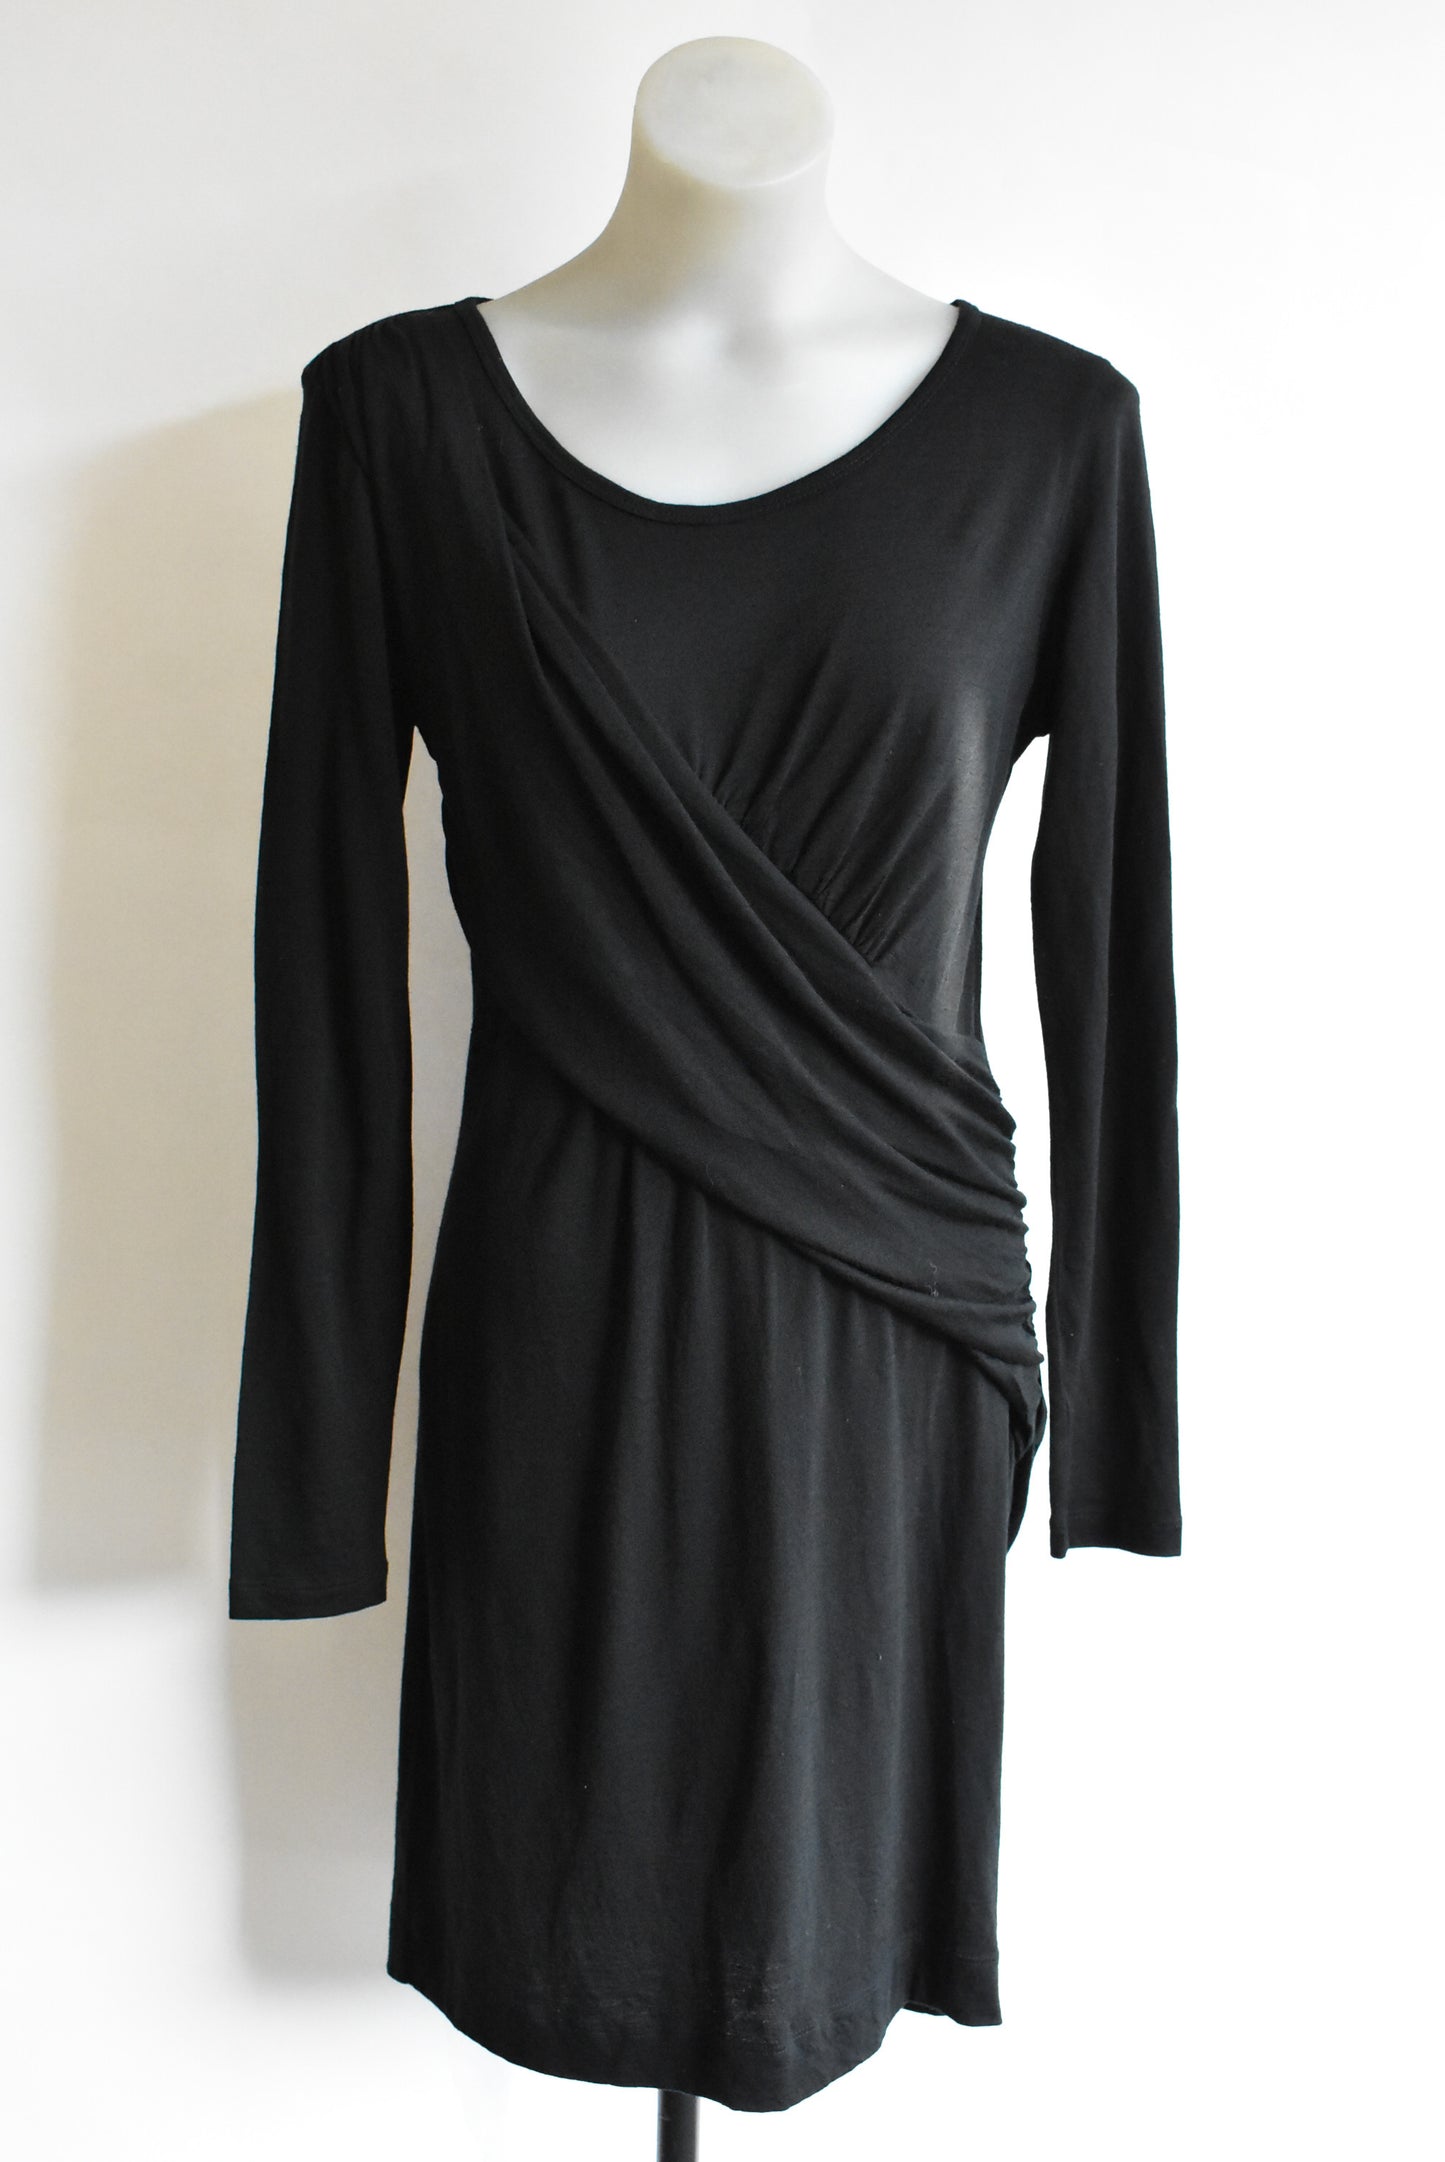 Deborah Sweeney 100% wool sash front dress, size s